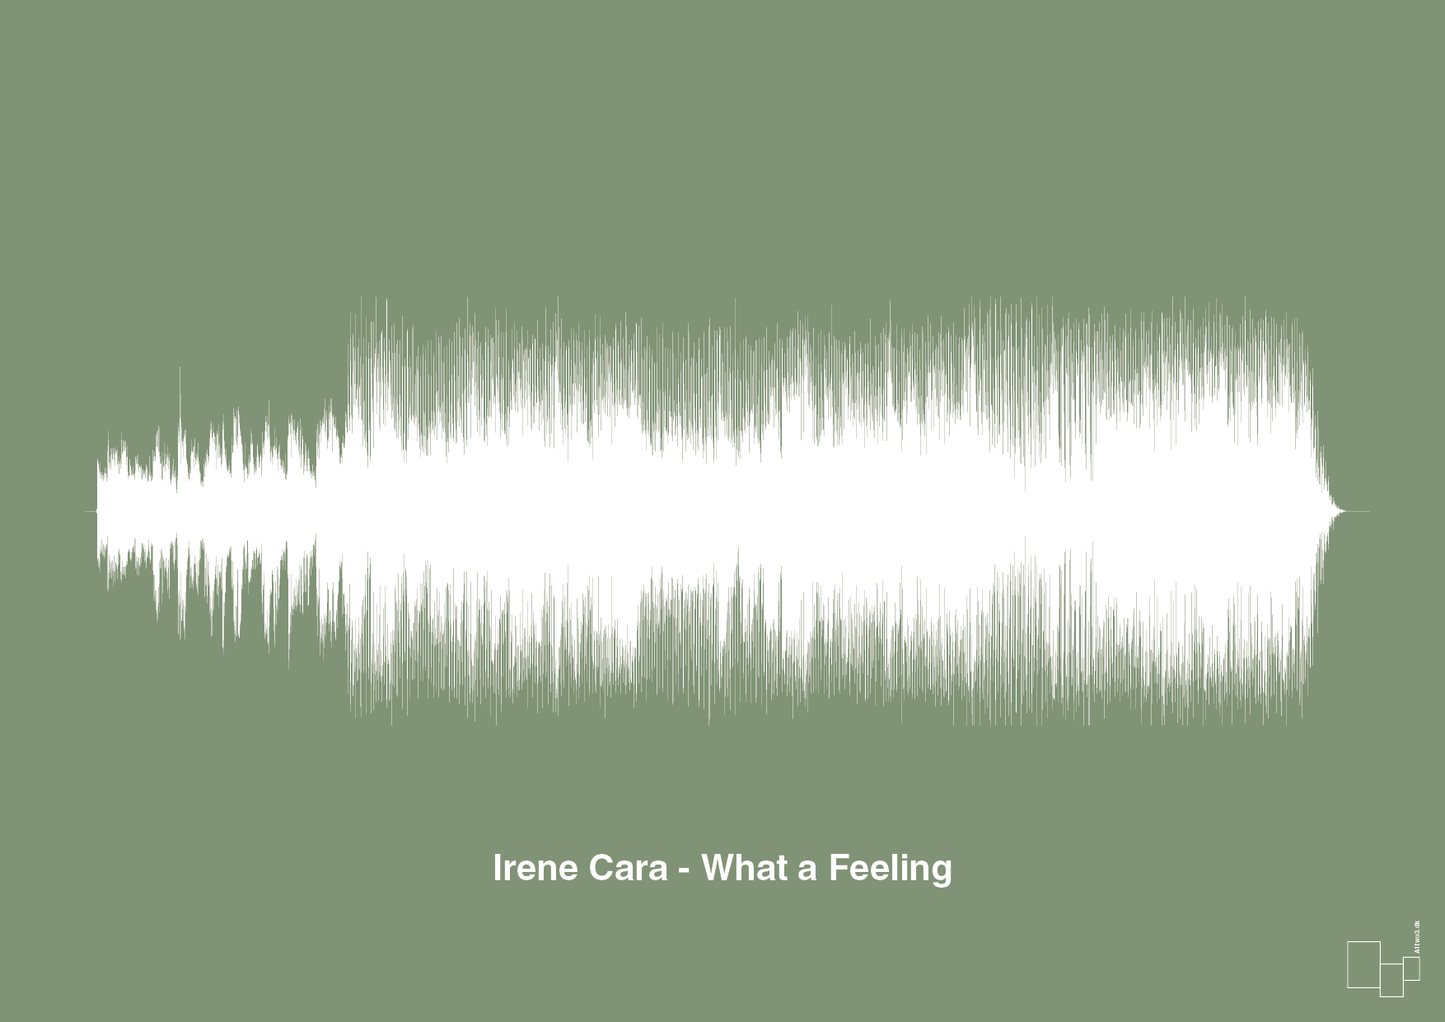 irene cara - what a feeling - Plakat med Musik i Jade